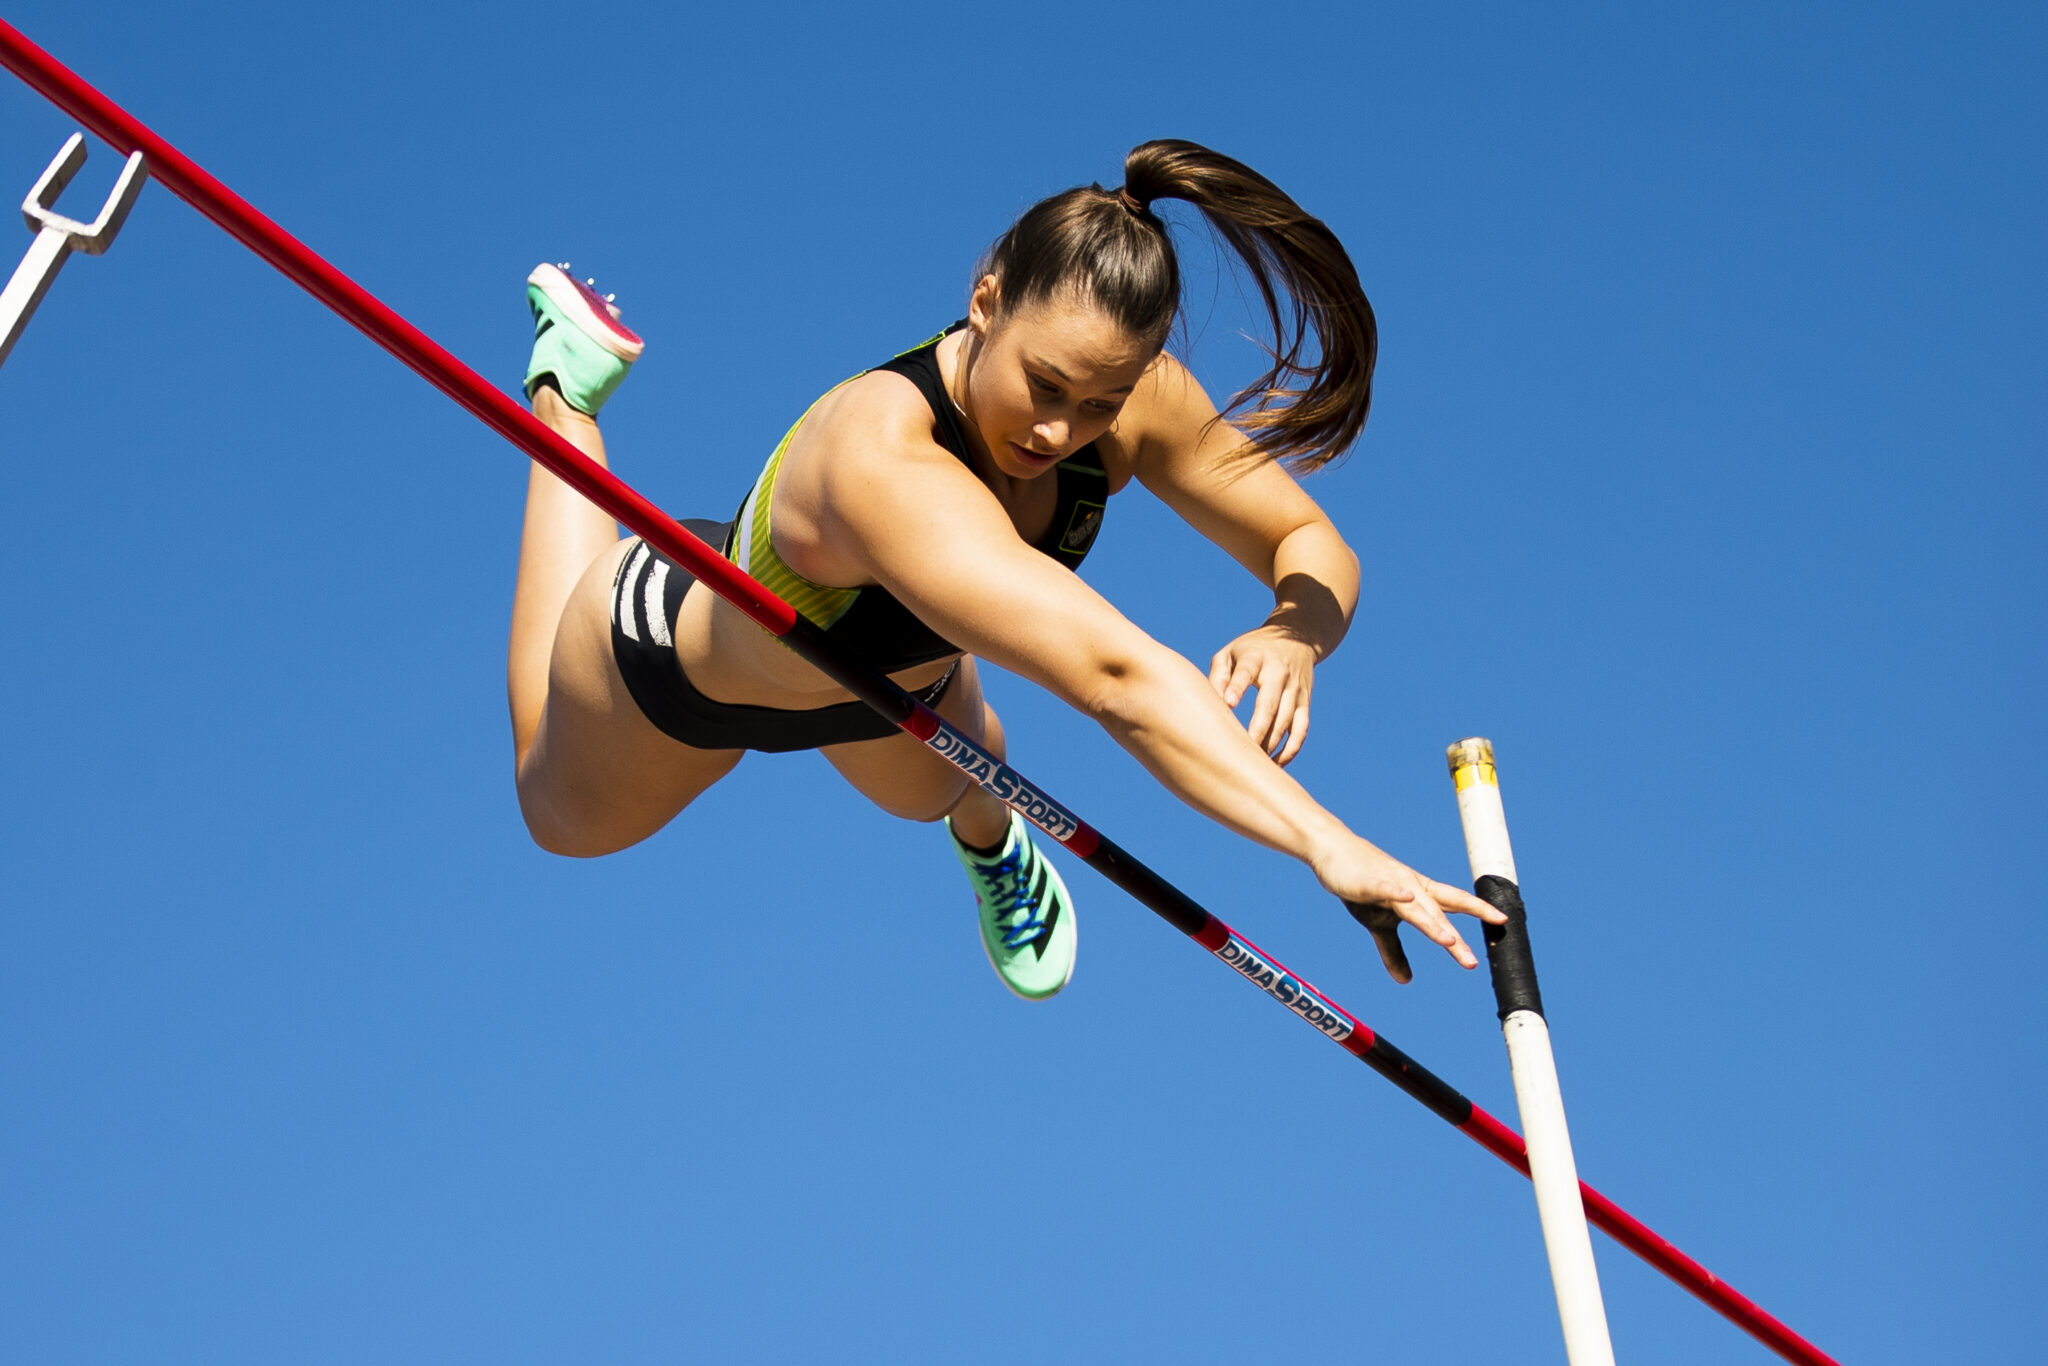 Pole vault women set to soar at Trusts Arena - Athletics New Zealand